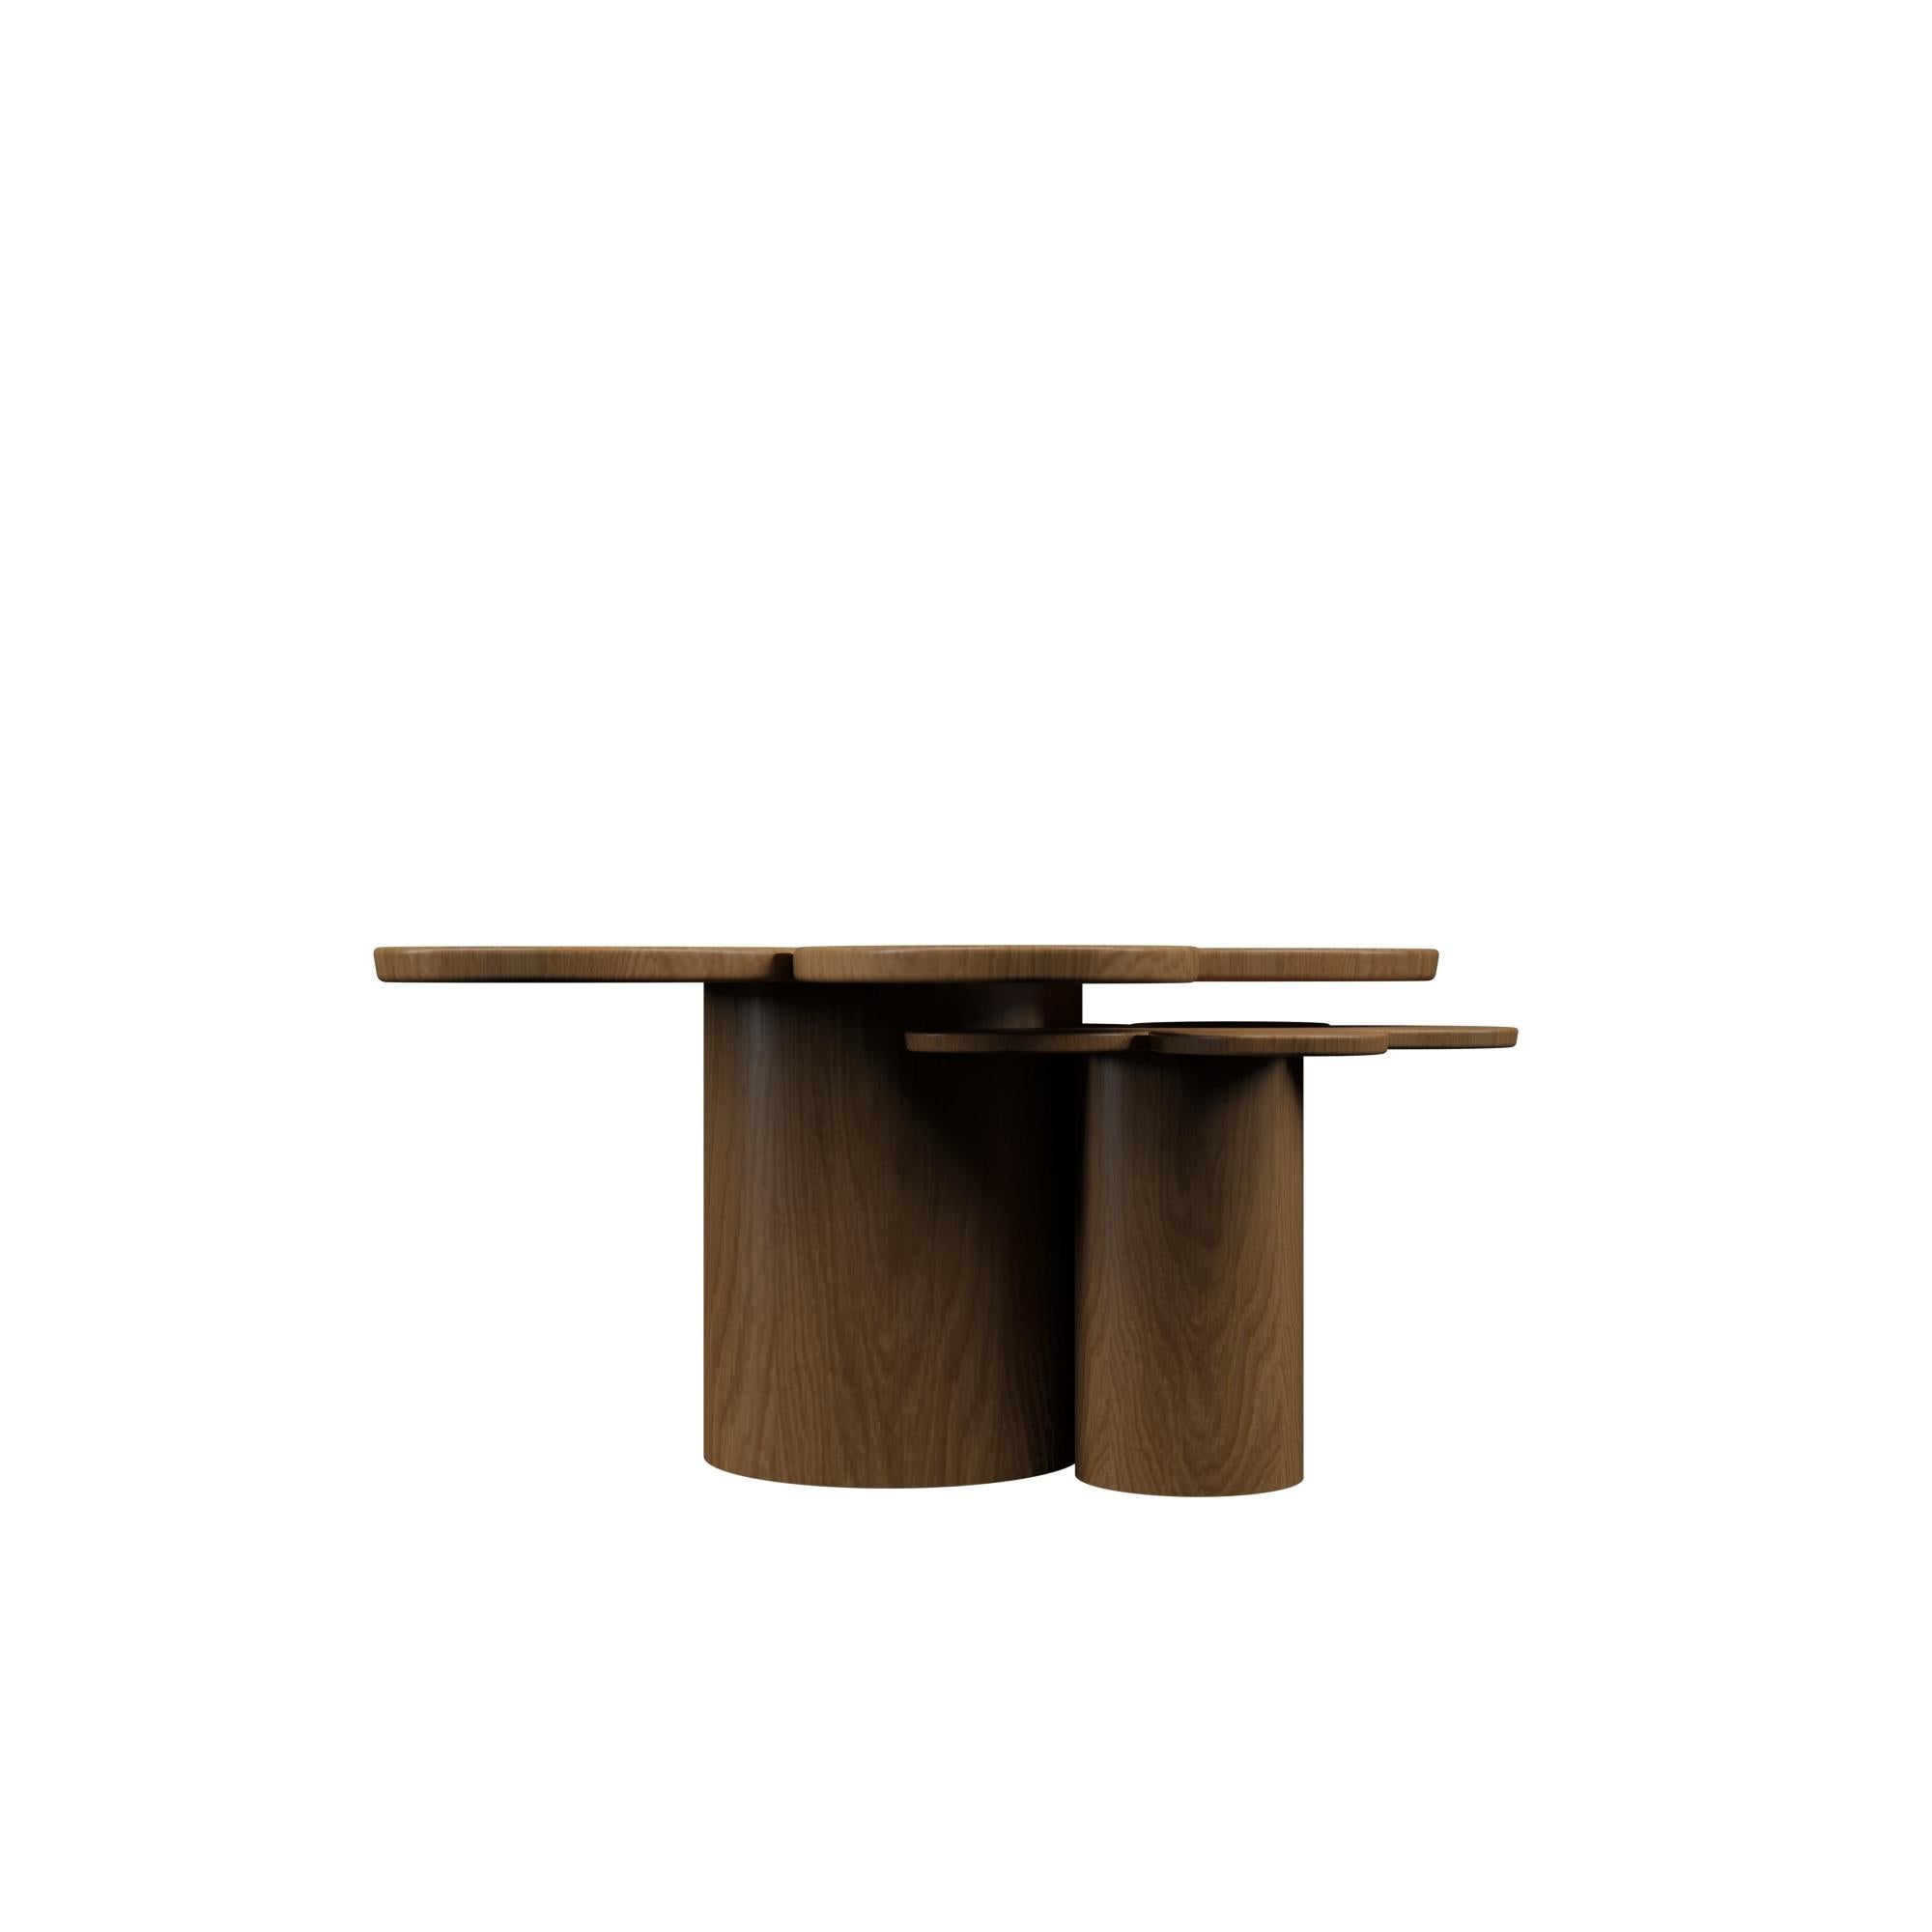 ST TROPEZ Coffee Table by Alexandre Ligios

39